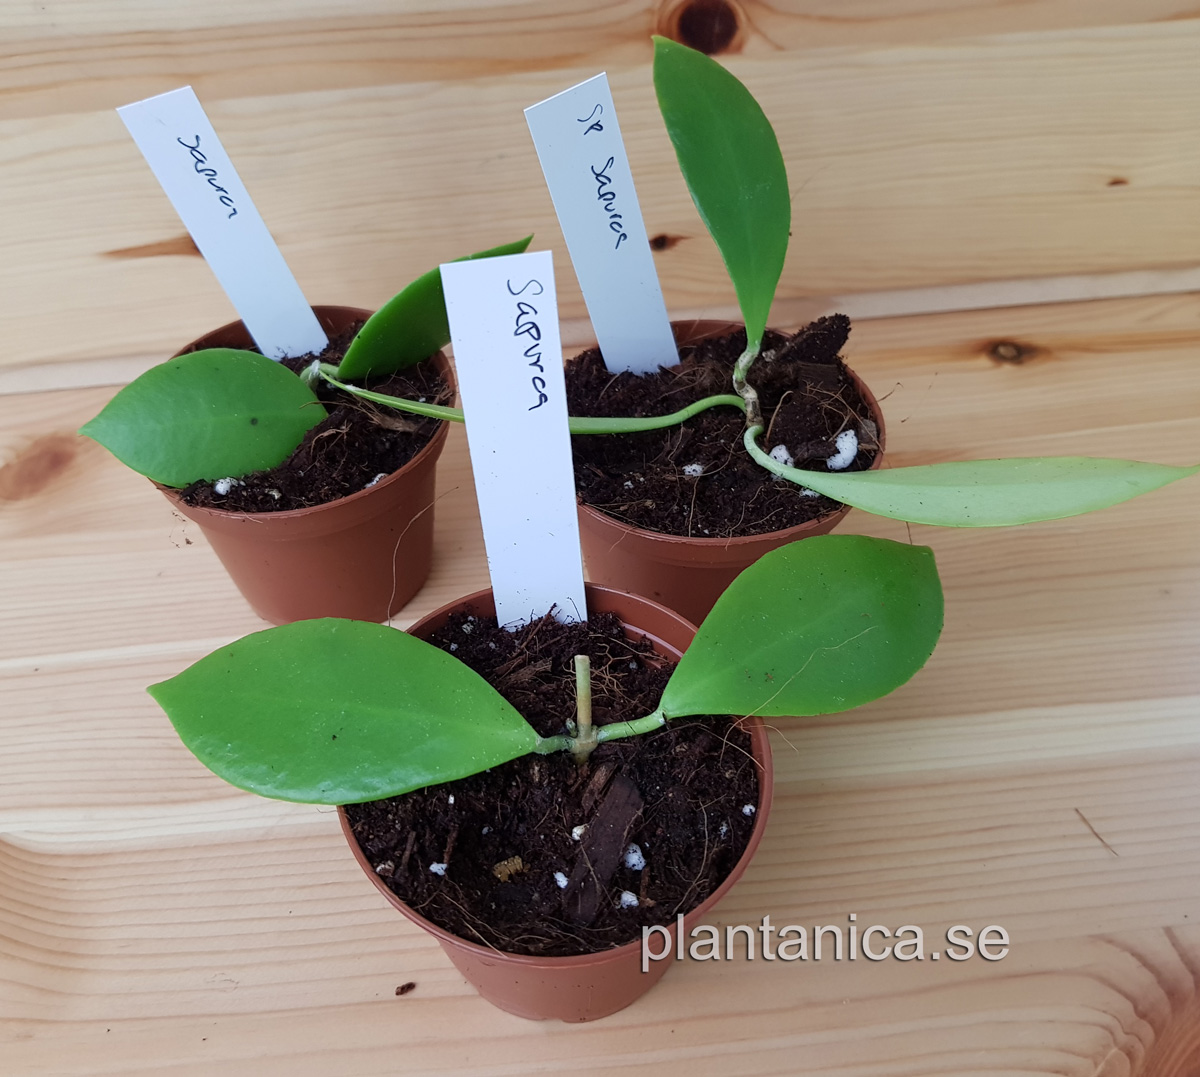 Hoya sp Sapuroa GPS 3752 rotad kp hos Plantanica webbutik